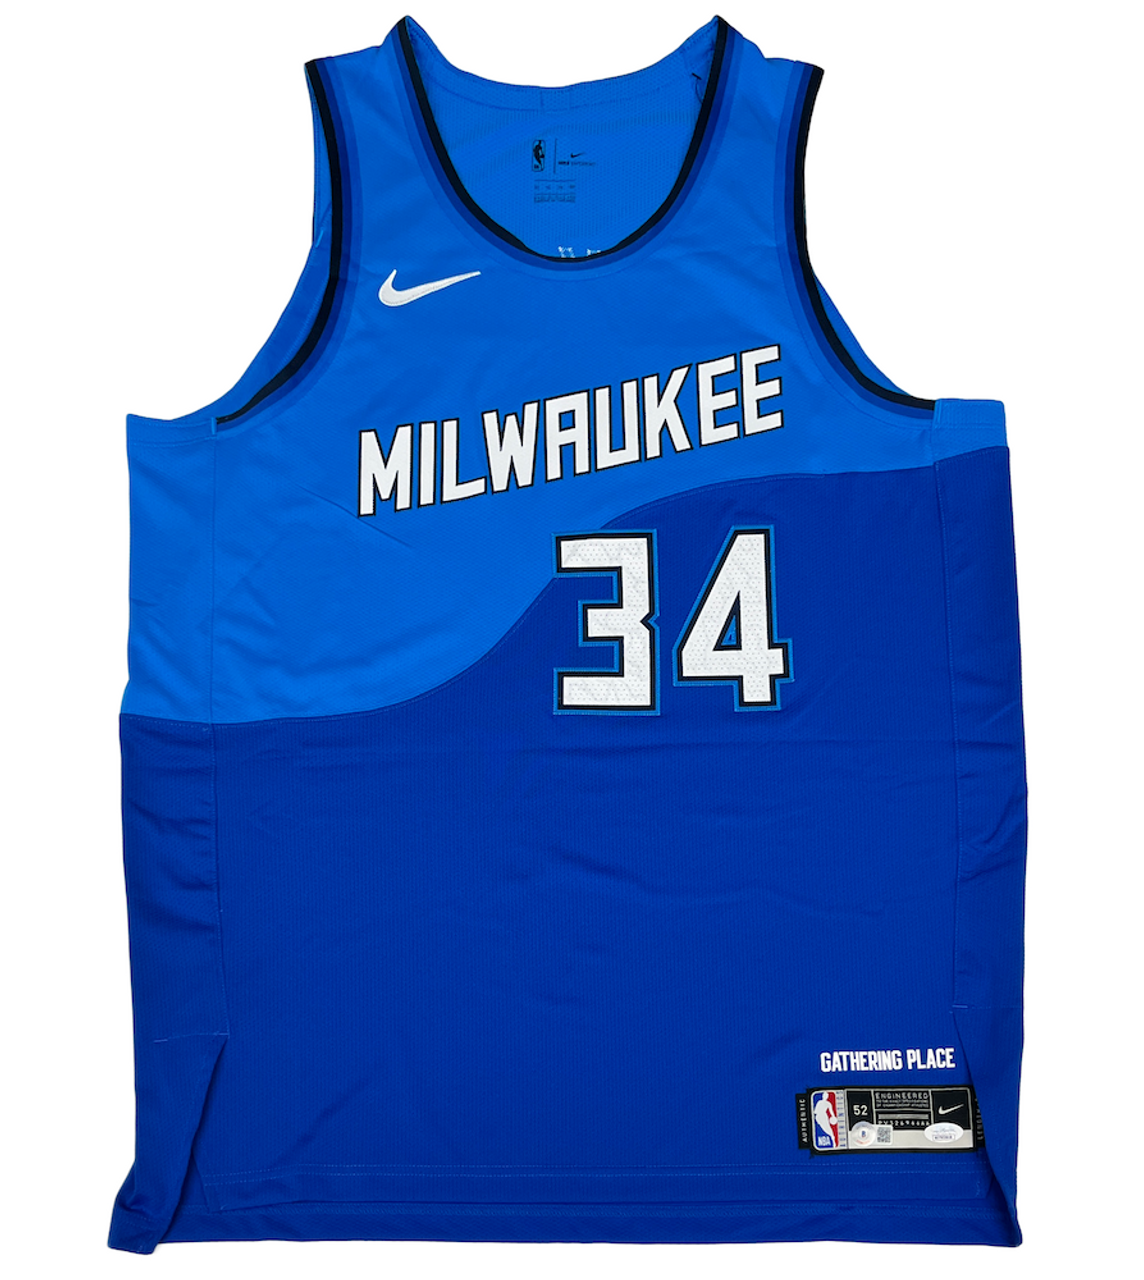 2021/22 Nike NBA Bucks Jersey Swingman Antetokounmpo City Edition New  W/Tags